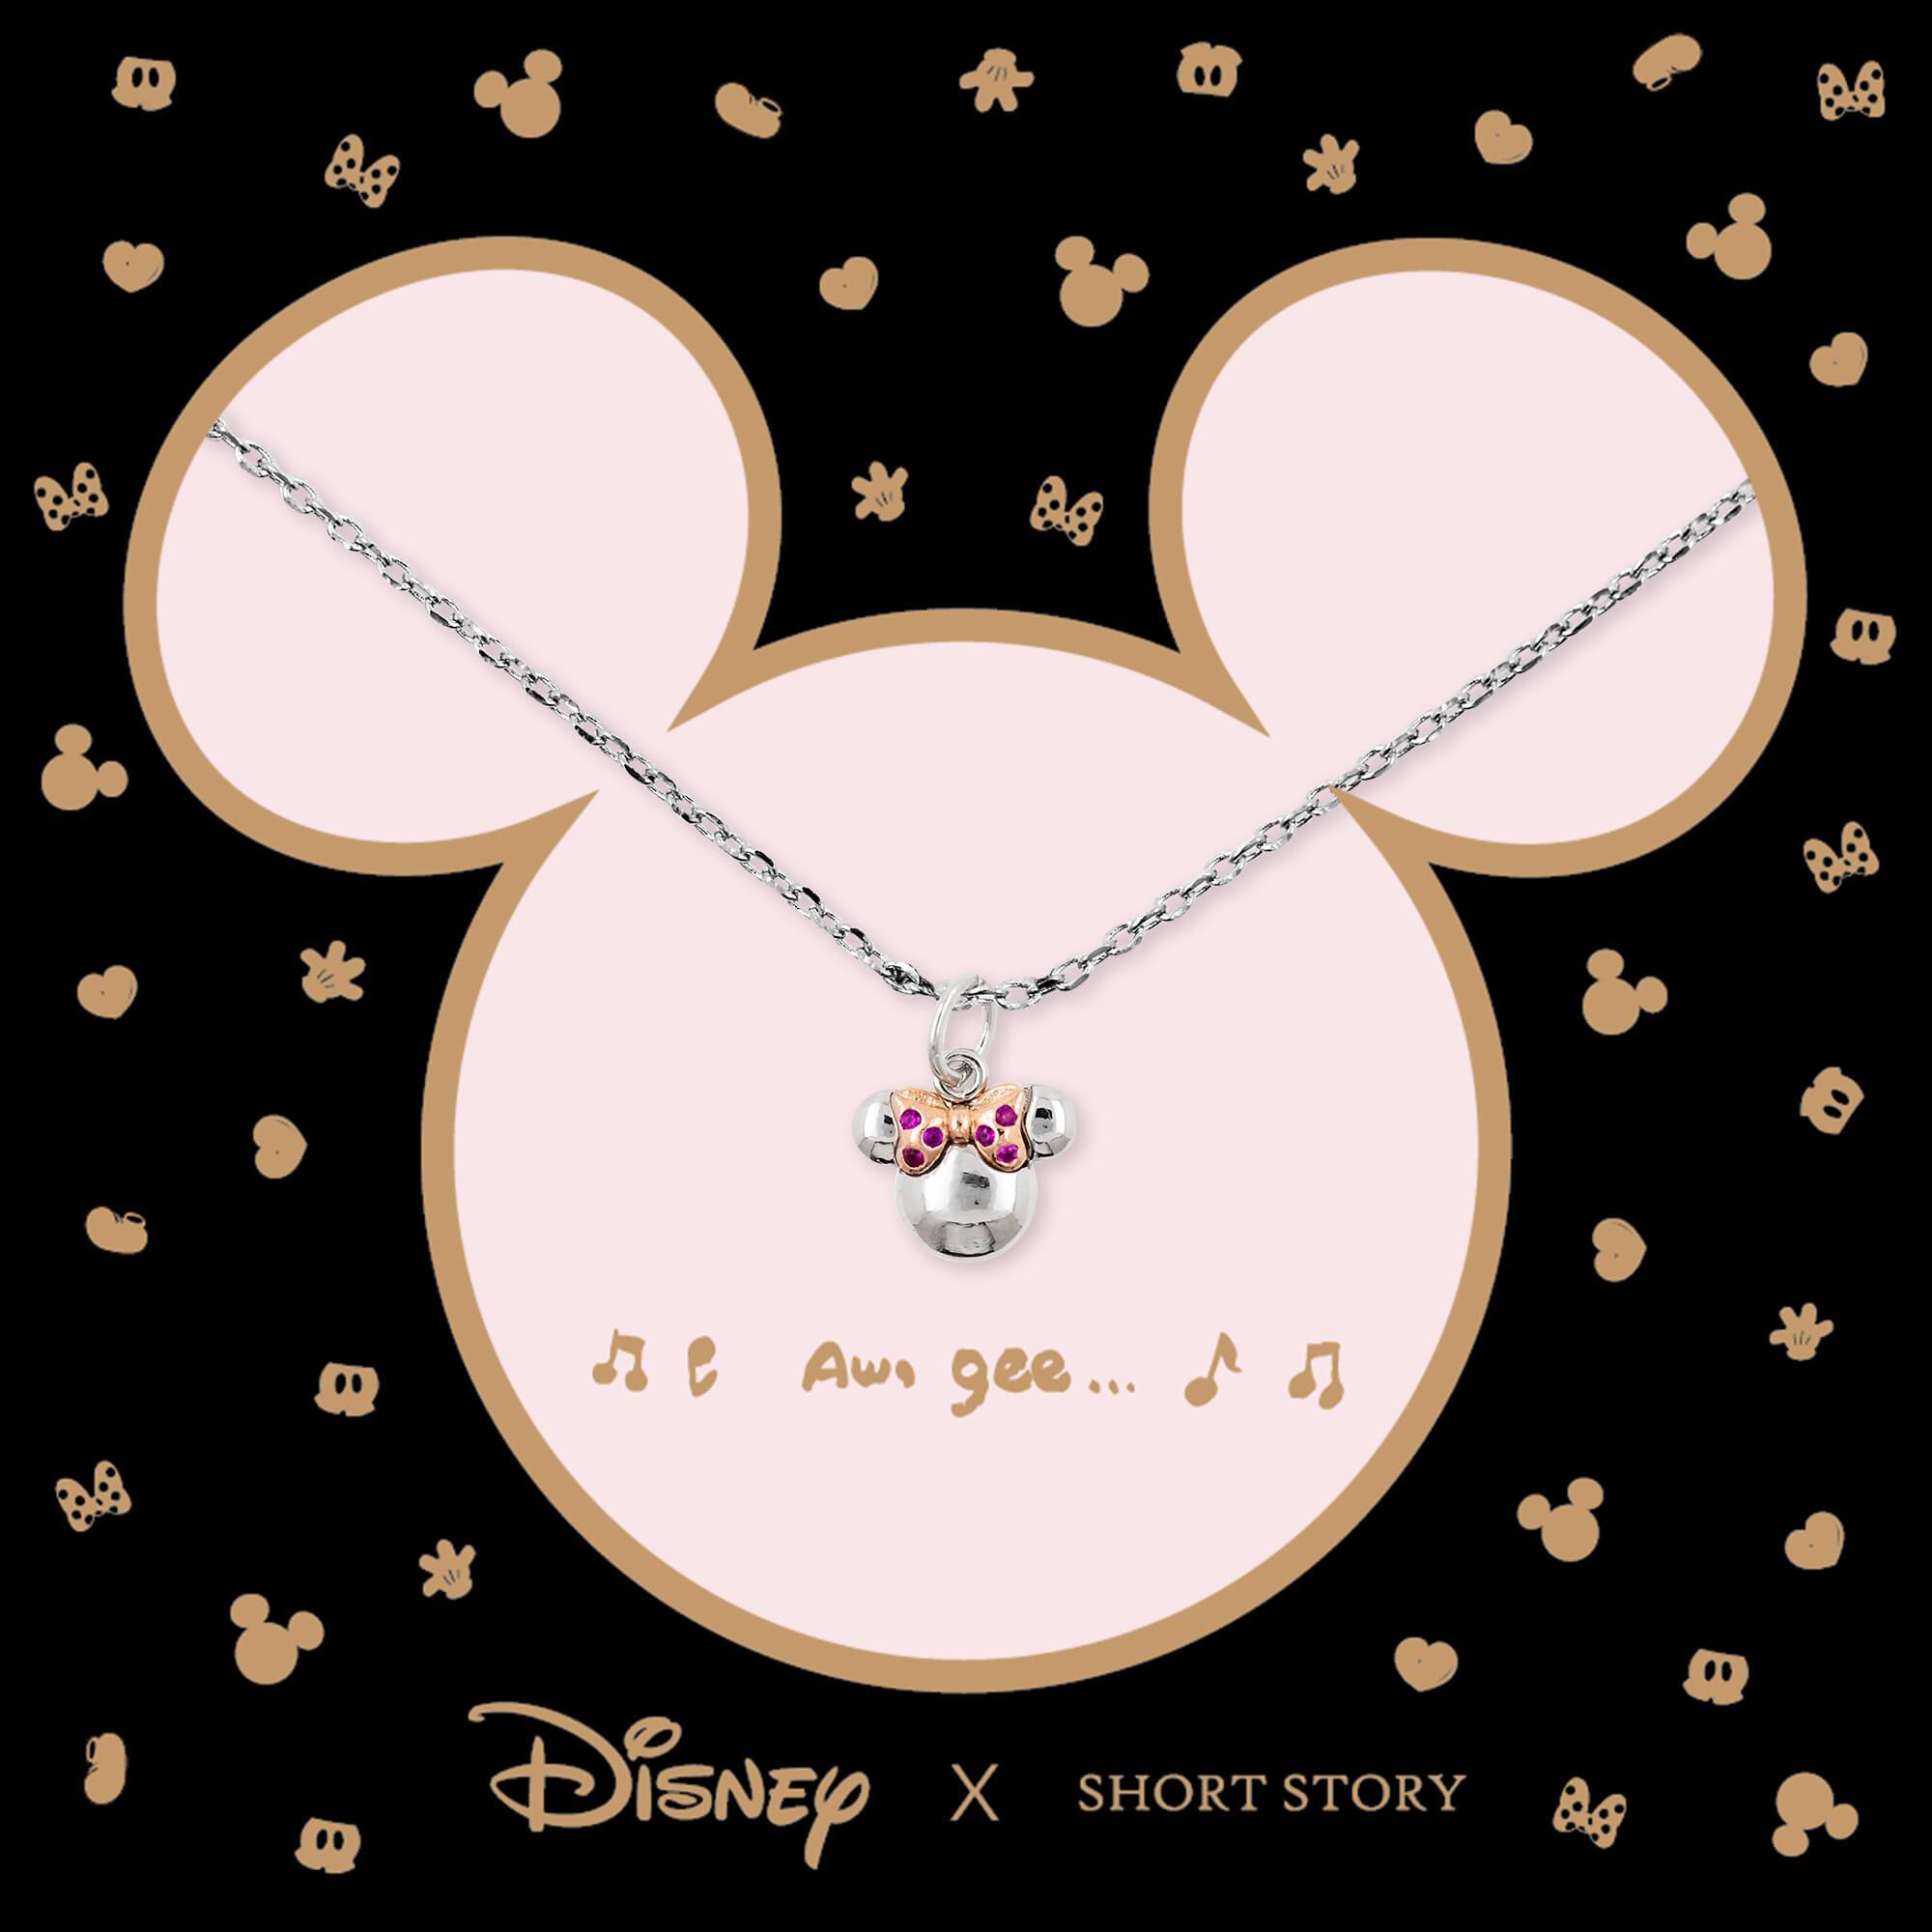 Disney Necklace Diamante Minnie Ears